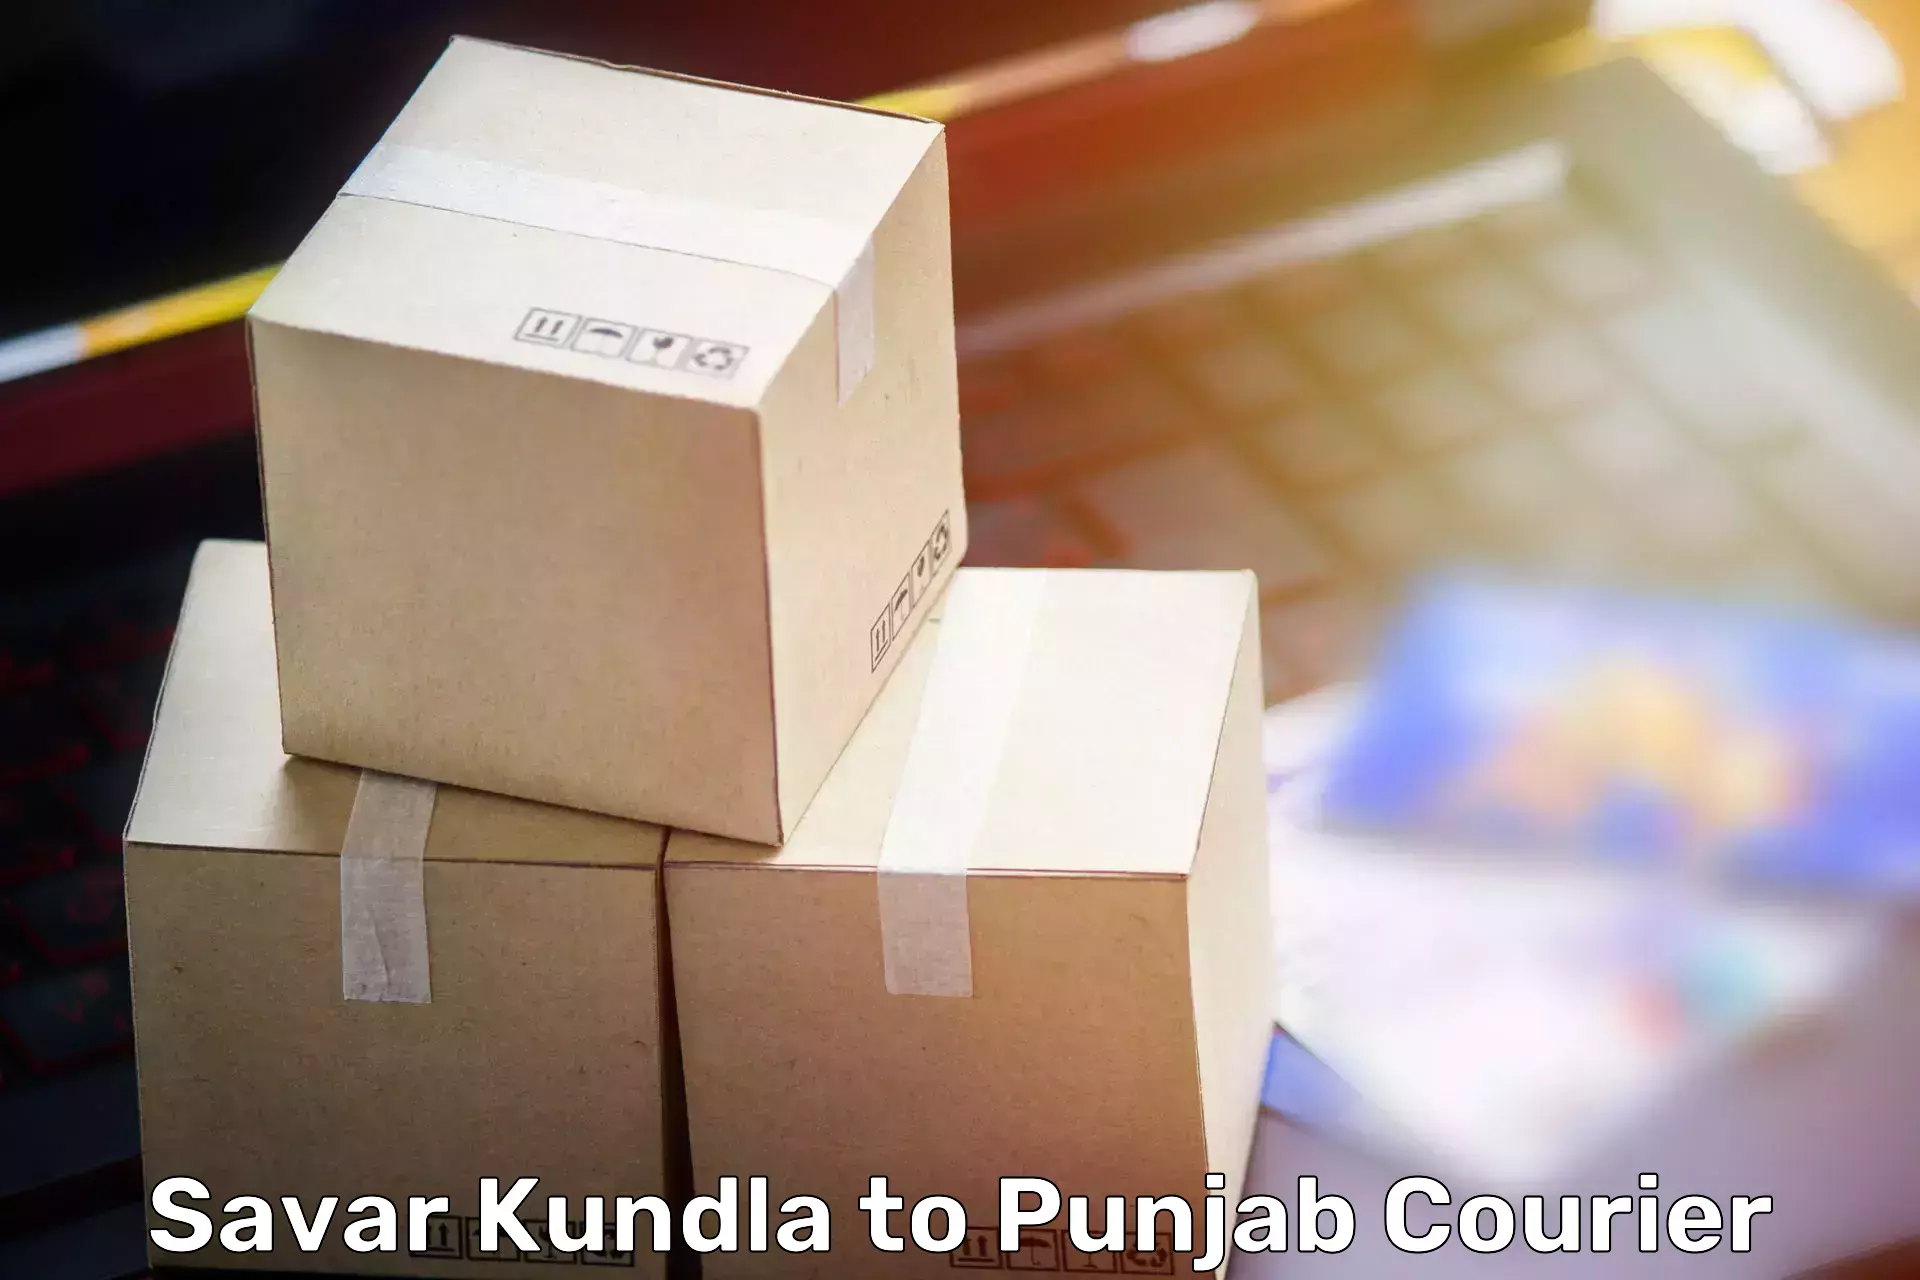 Full-service movers Savar Kundla to Ludhiana